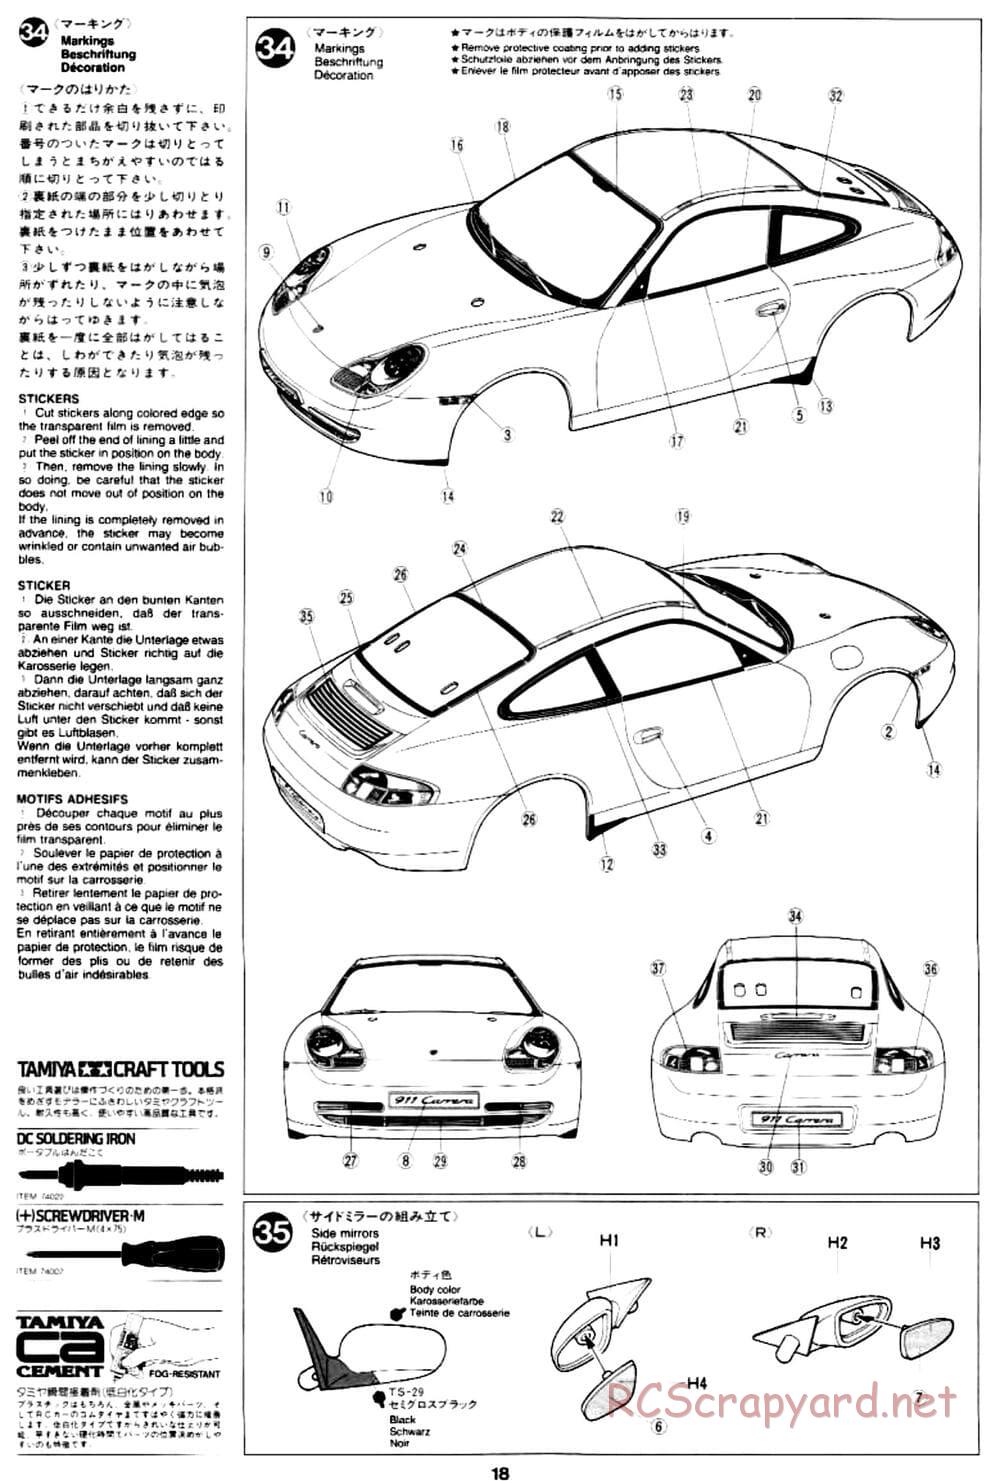 Tamiya - Porsche 911 Carrera - M02L Chassis - Manual - Page 18